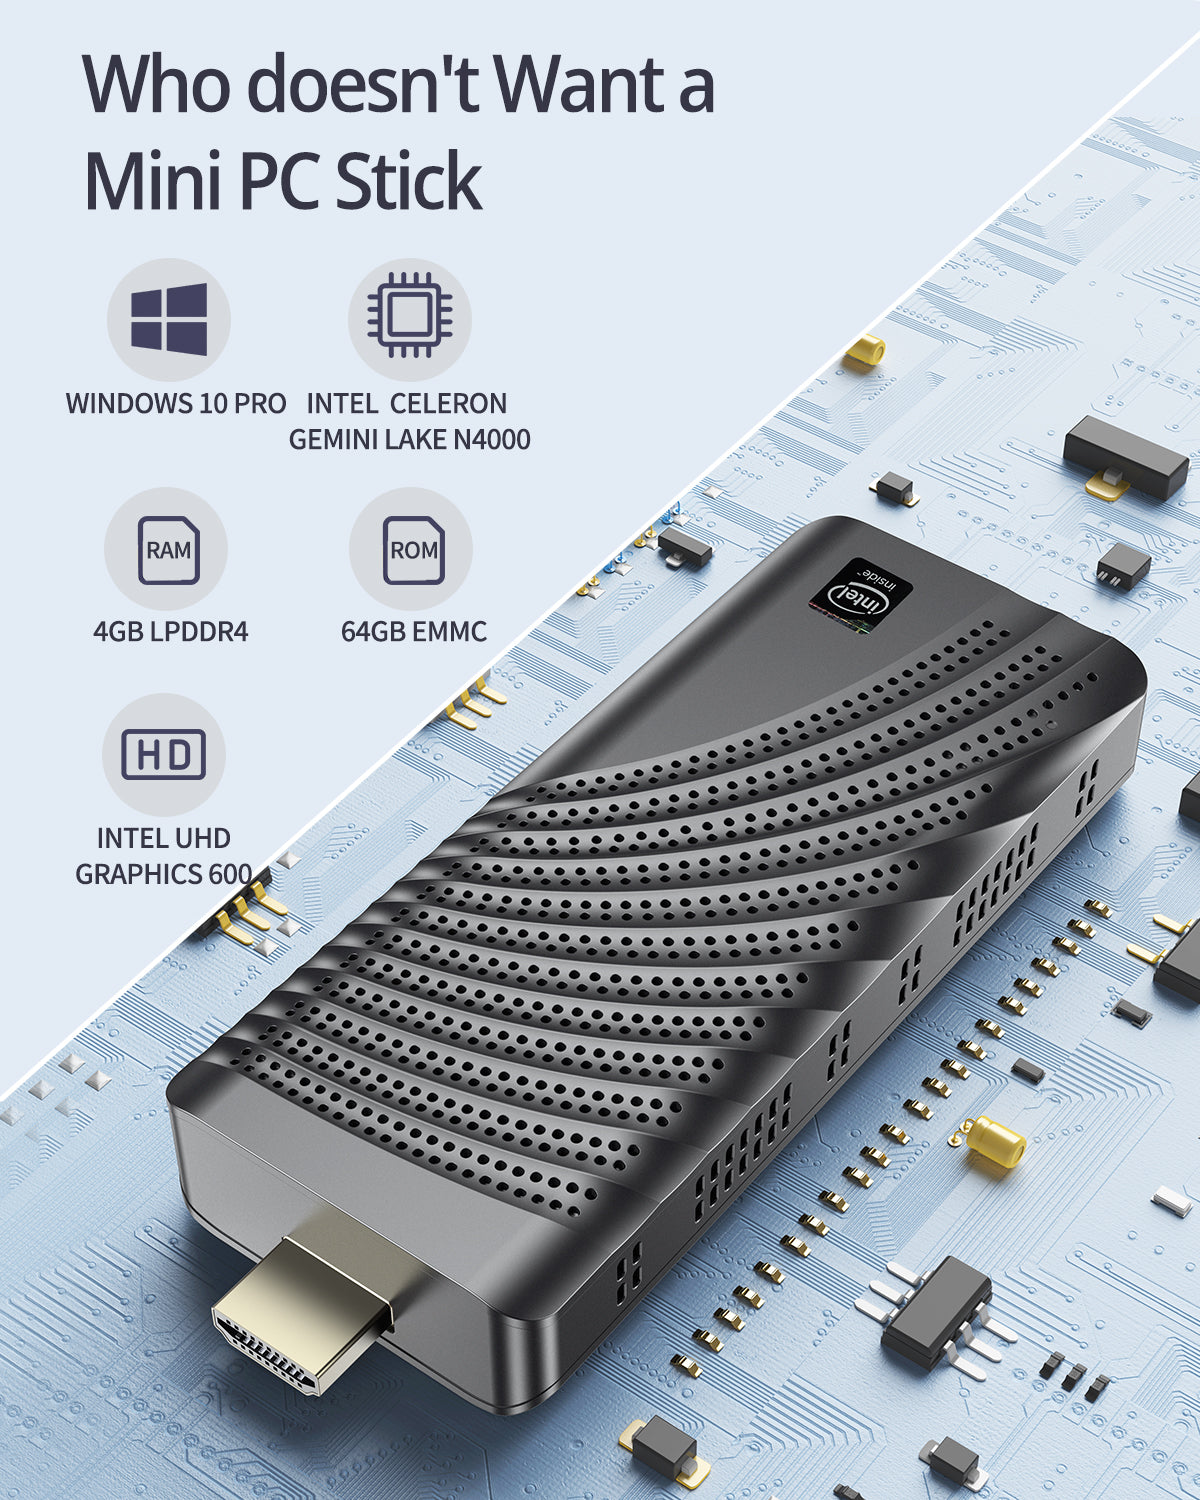 Mini PC Stick Intel Celeron N4000 (Up to 2.6GHz) Windows 10 Pro Mini Computer Stick 4GB DDR4 64GB eMMC Micro Desktop Small Form Factor PC Supports 4K HDMI, 2.4G/5G WiFi, Bluetooth 4.2, Auto Power On